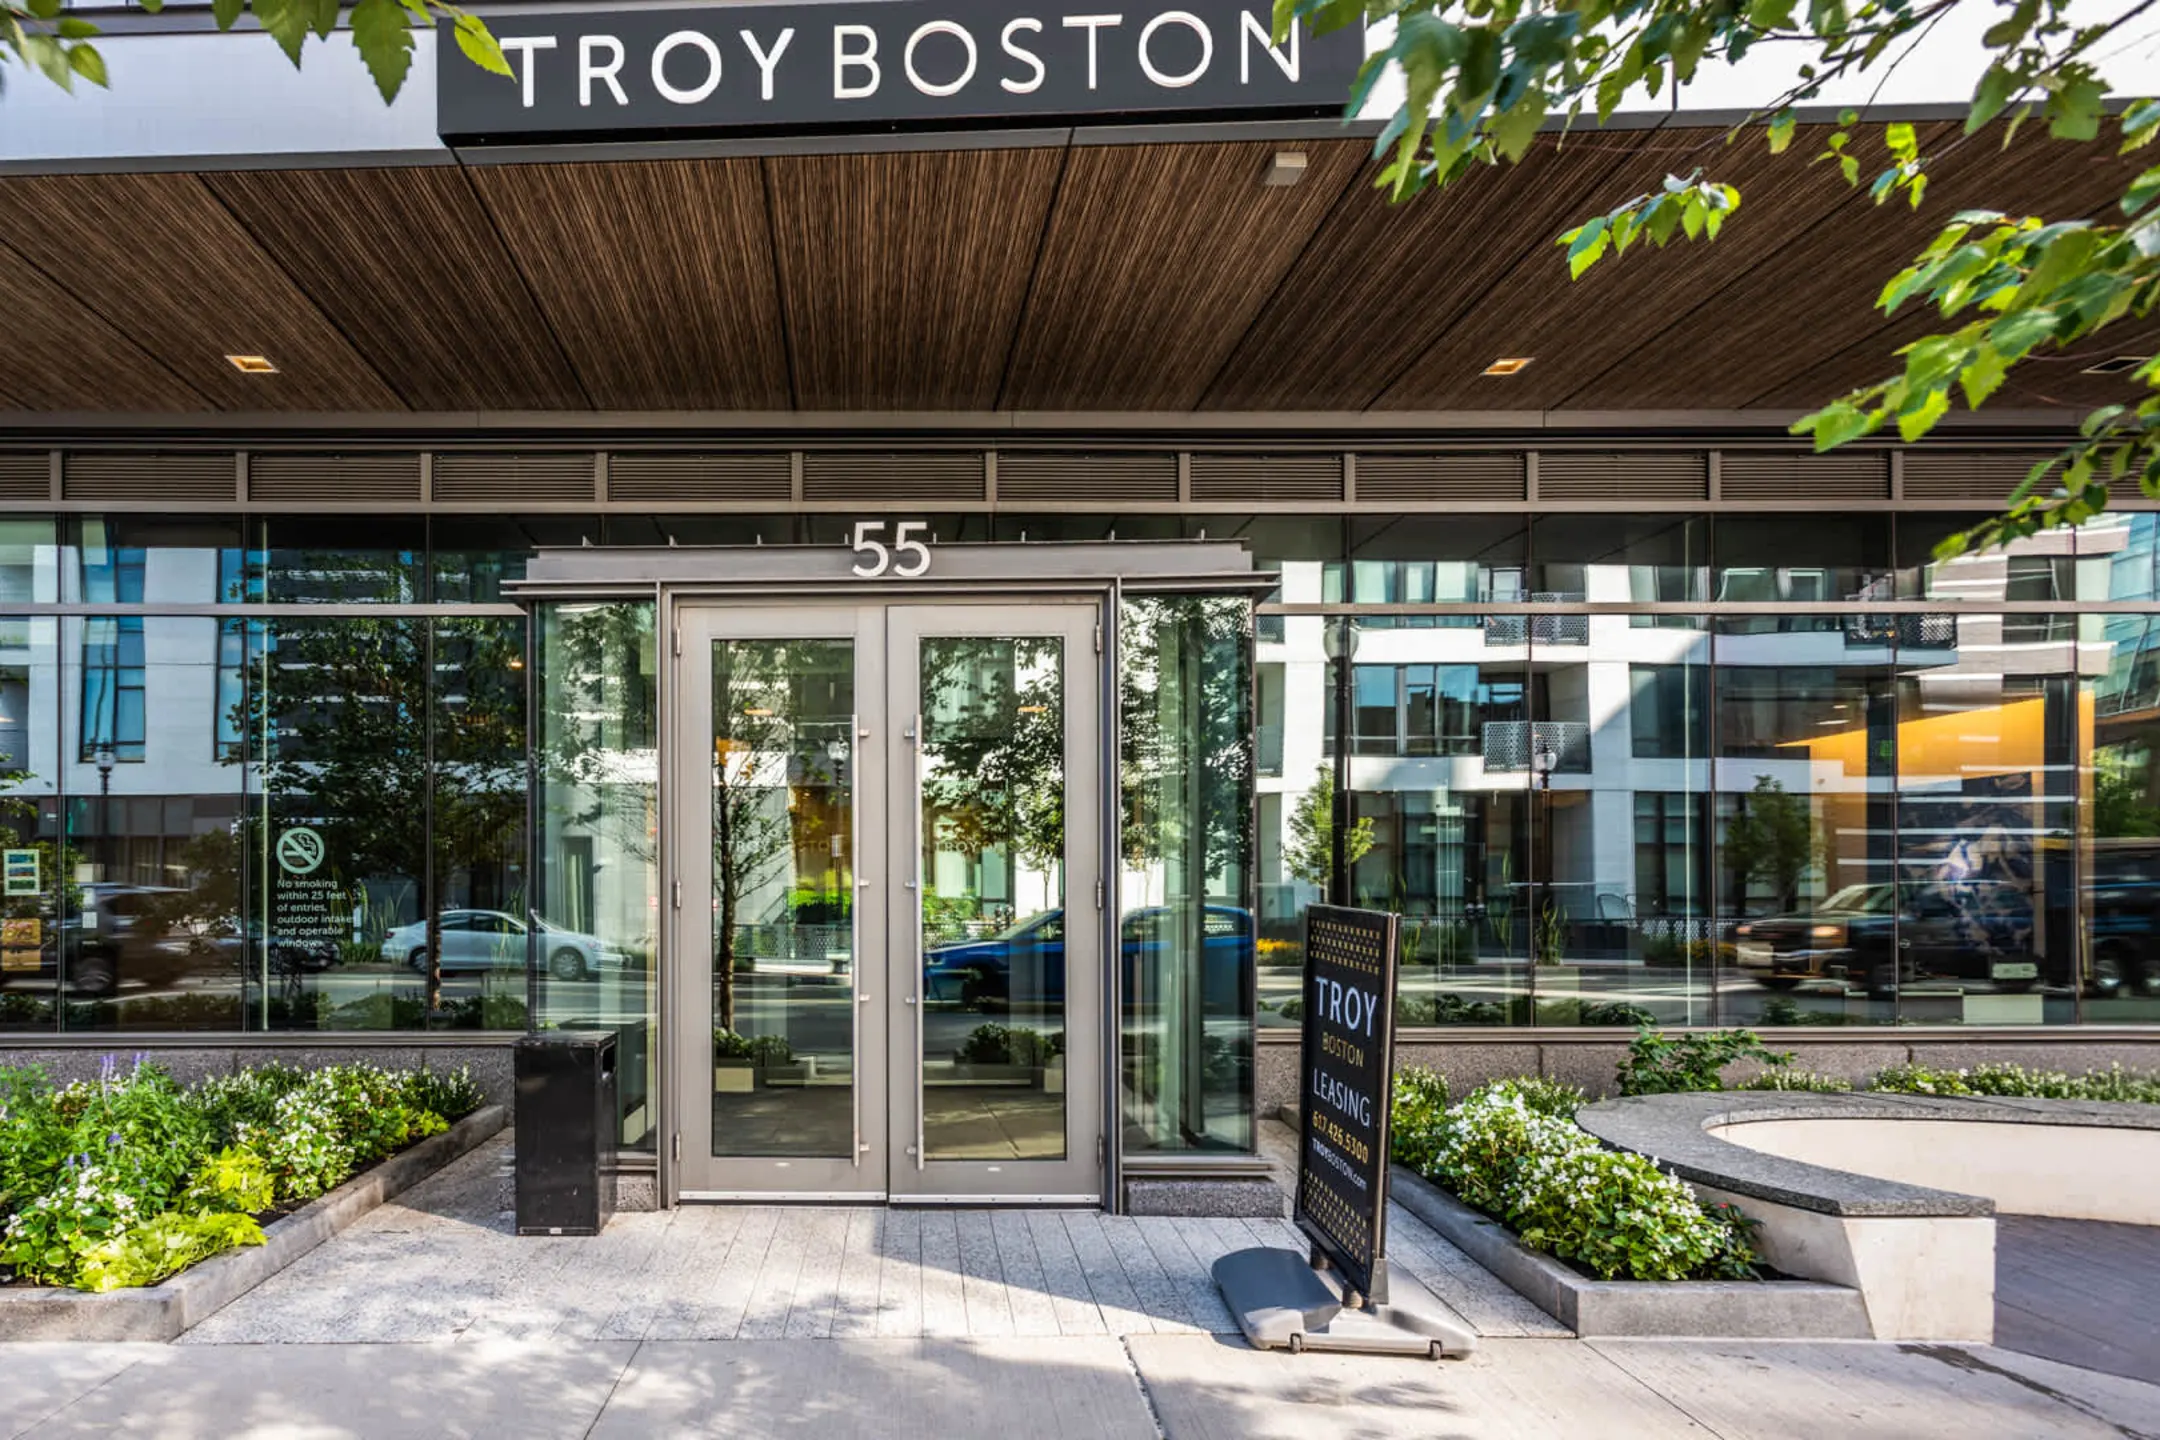 Building - Troy Boston - Boston, MA